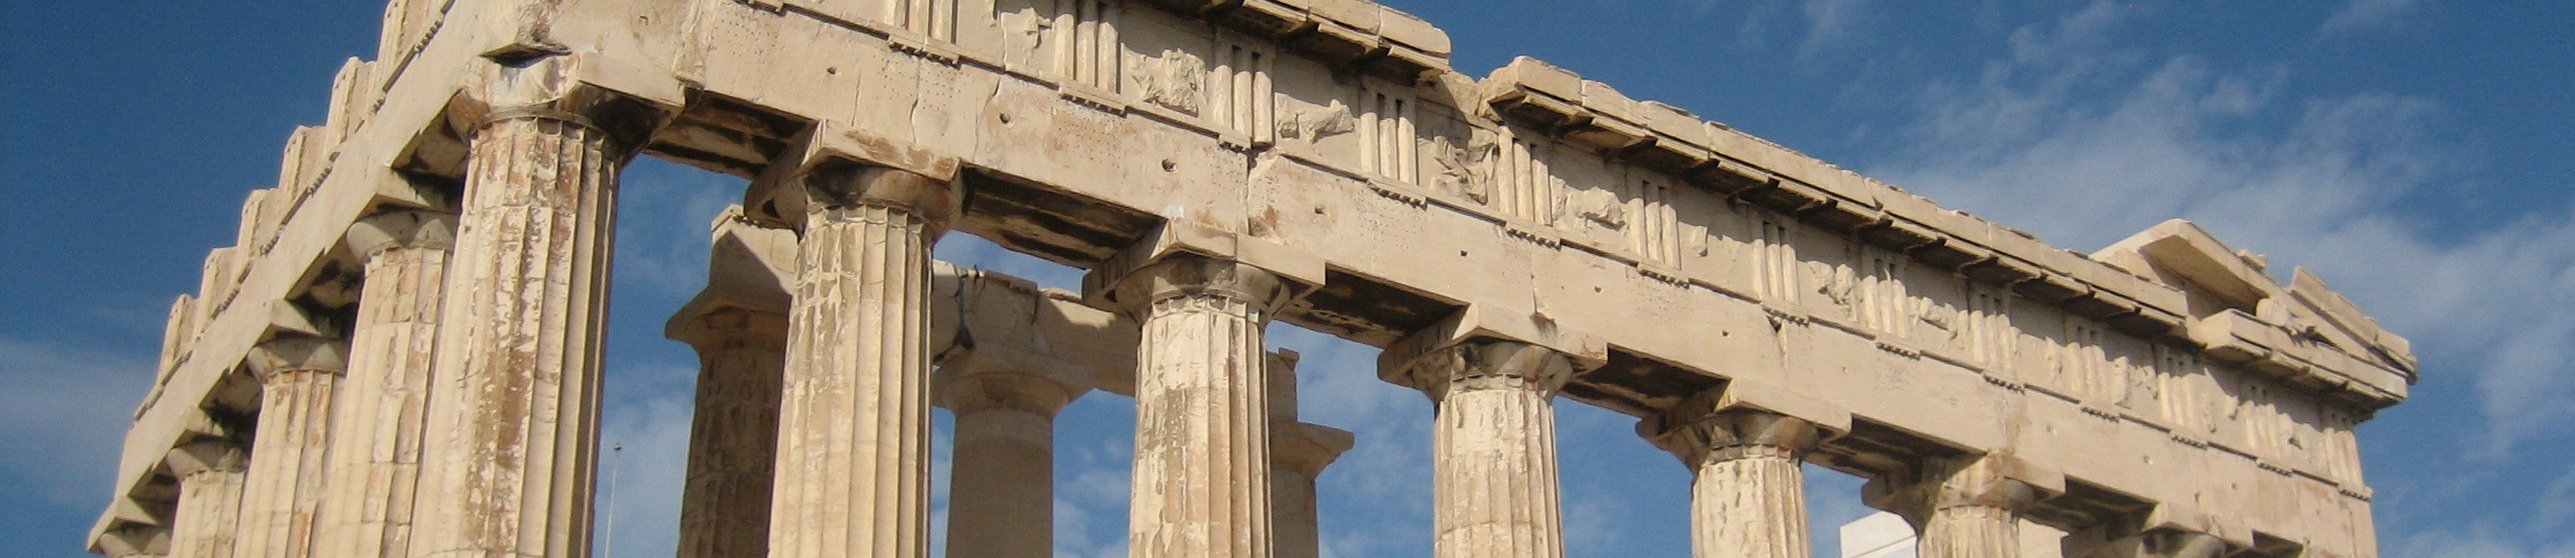 Greece banner image